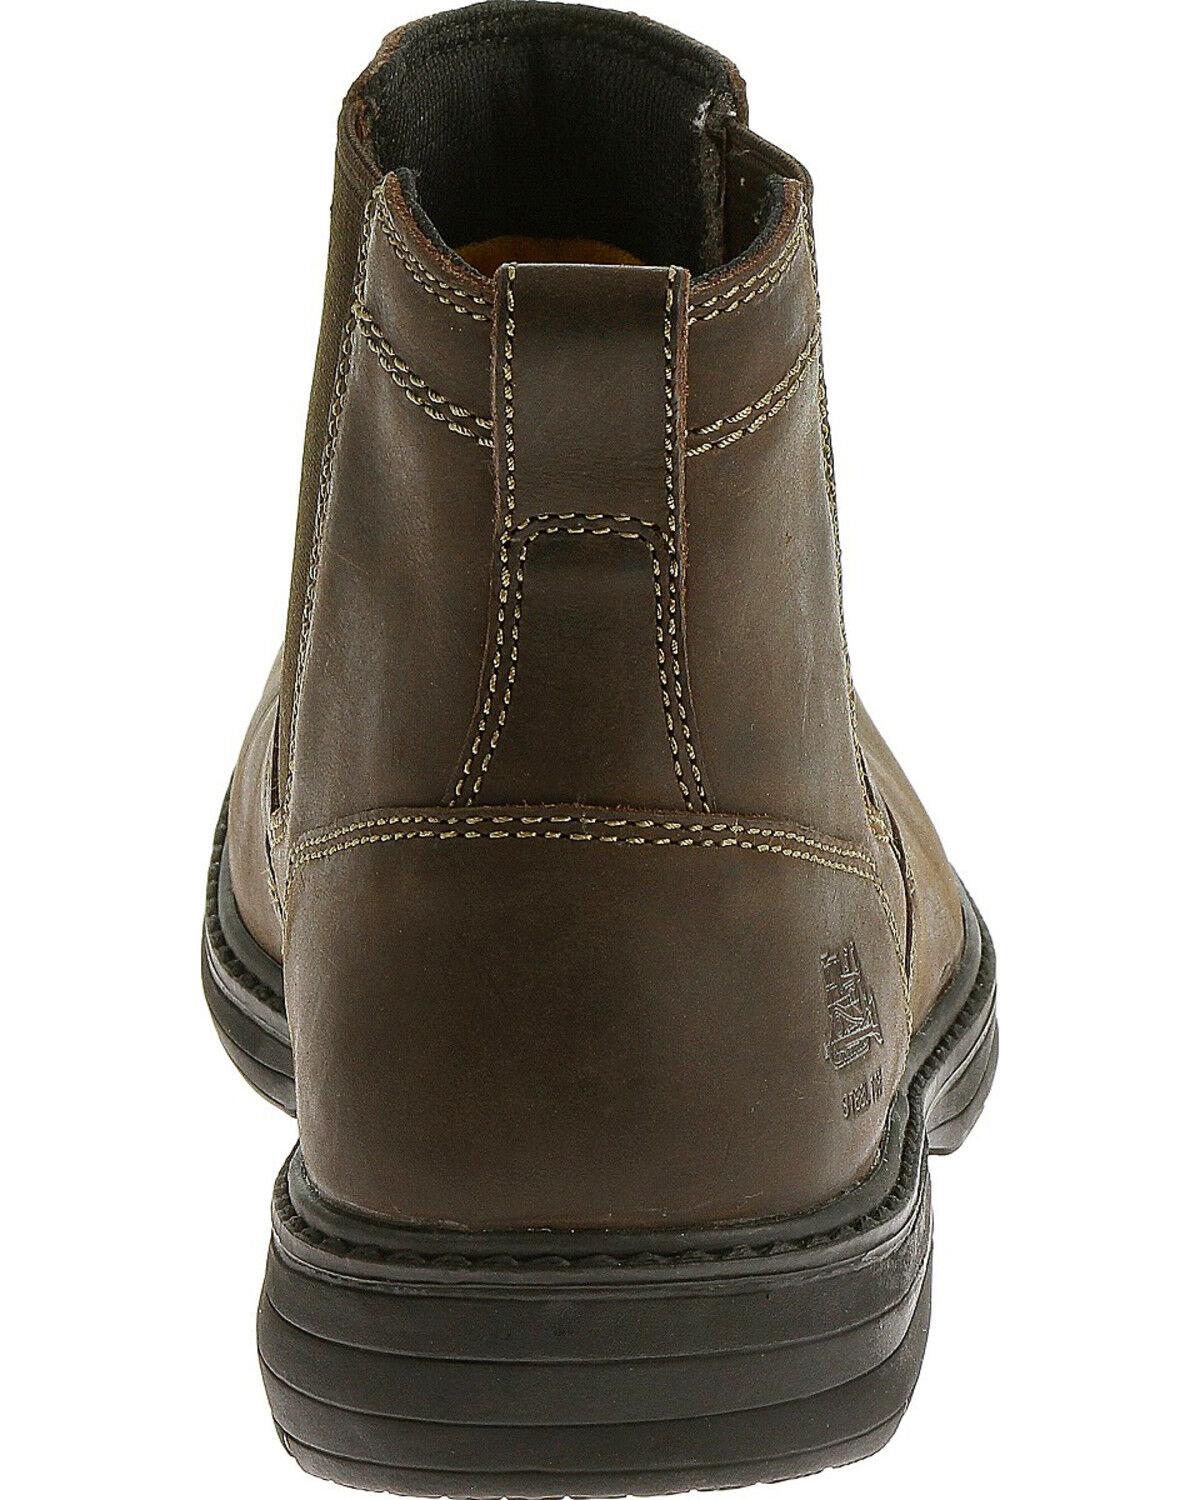 CAT Caterpillar Men's P90478 Inherit Pull On Steel Toe Brown Work Boots Shoes 